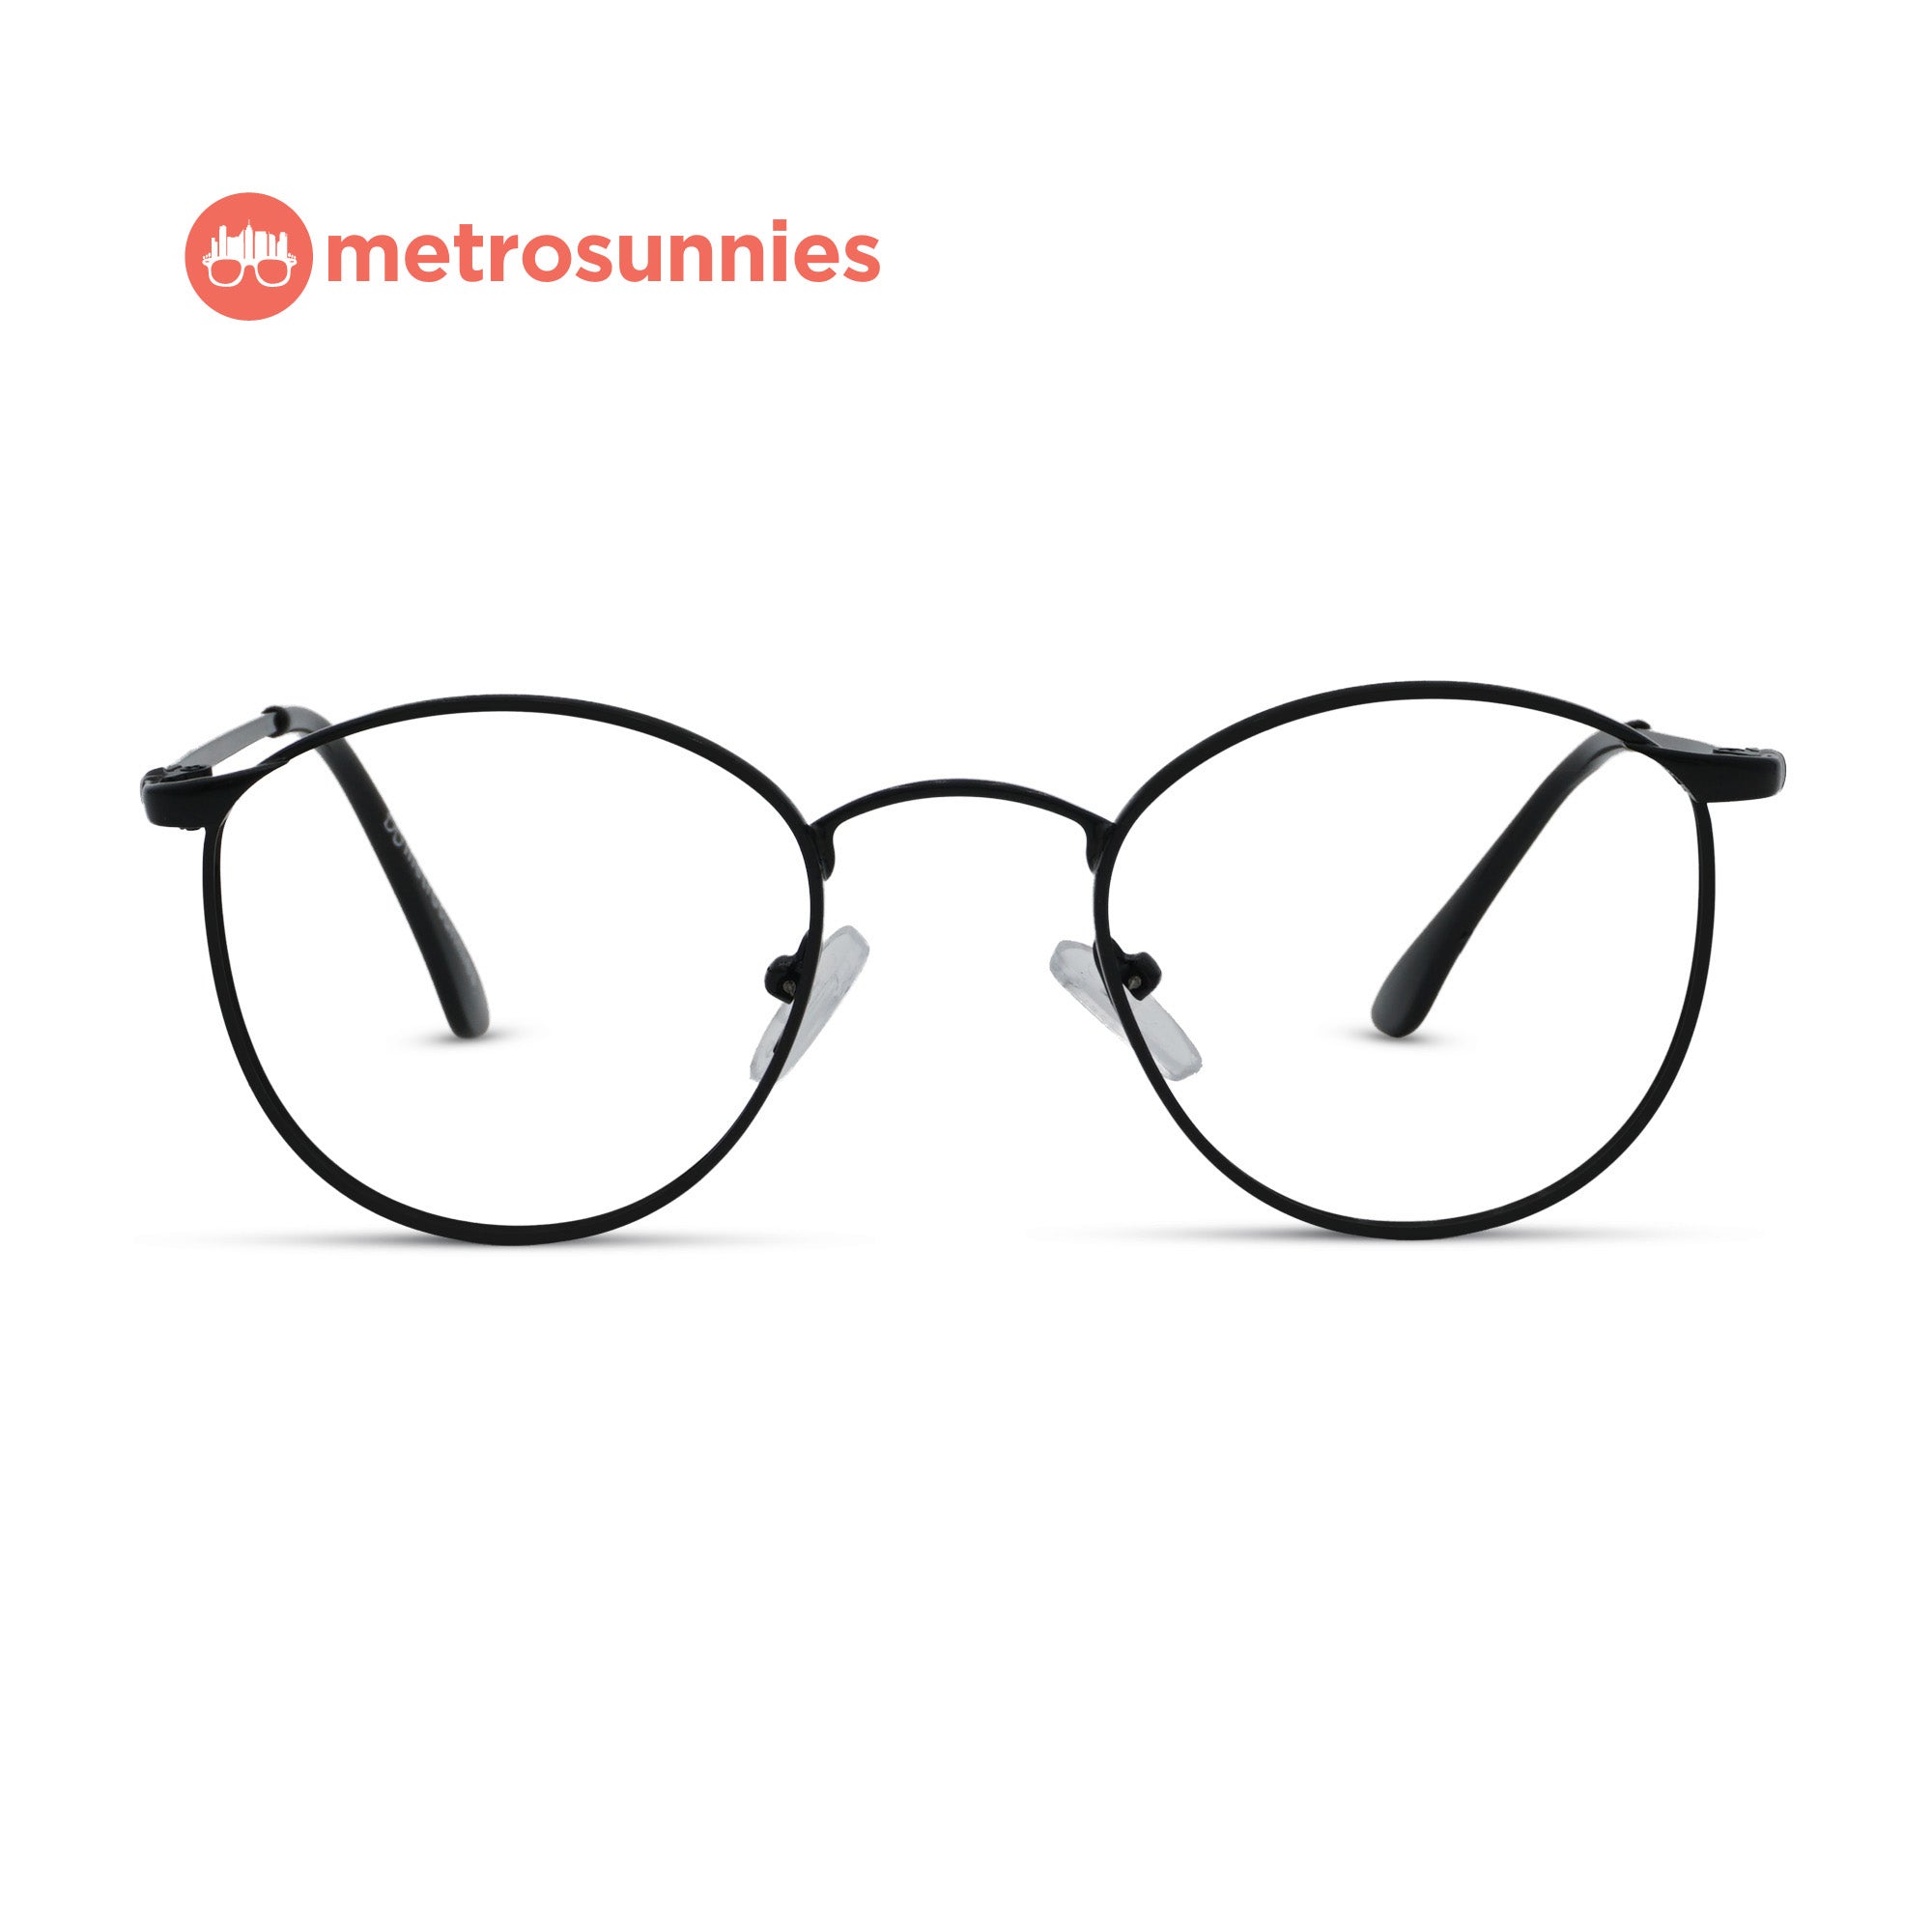 MetroSunnies Royce Specs (Black) / Replaceable Lens / Eyeglasses for Men and Women